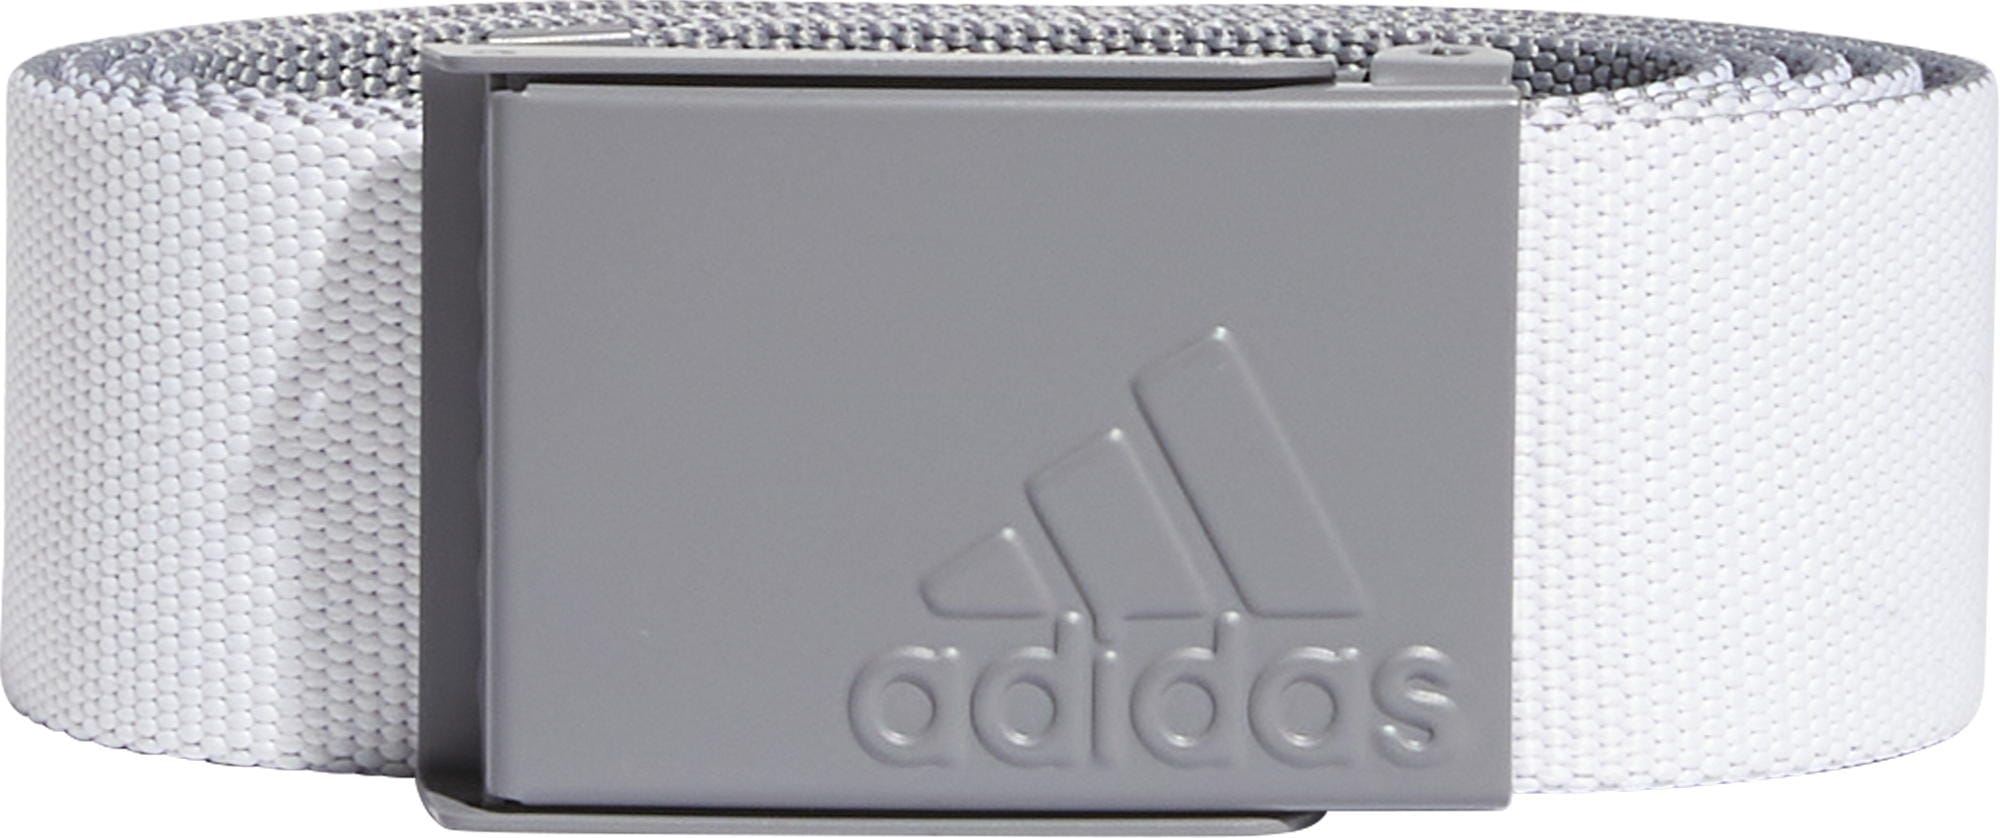 adidas Revers Web Gürtel Farbe: white/grey